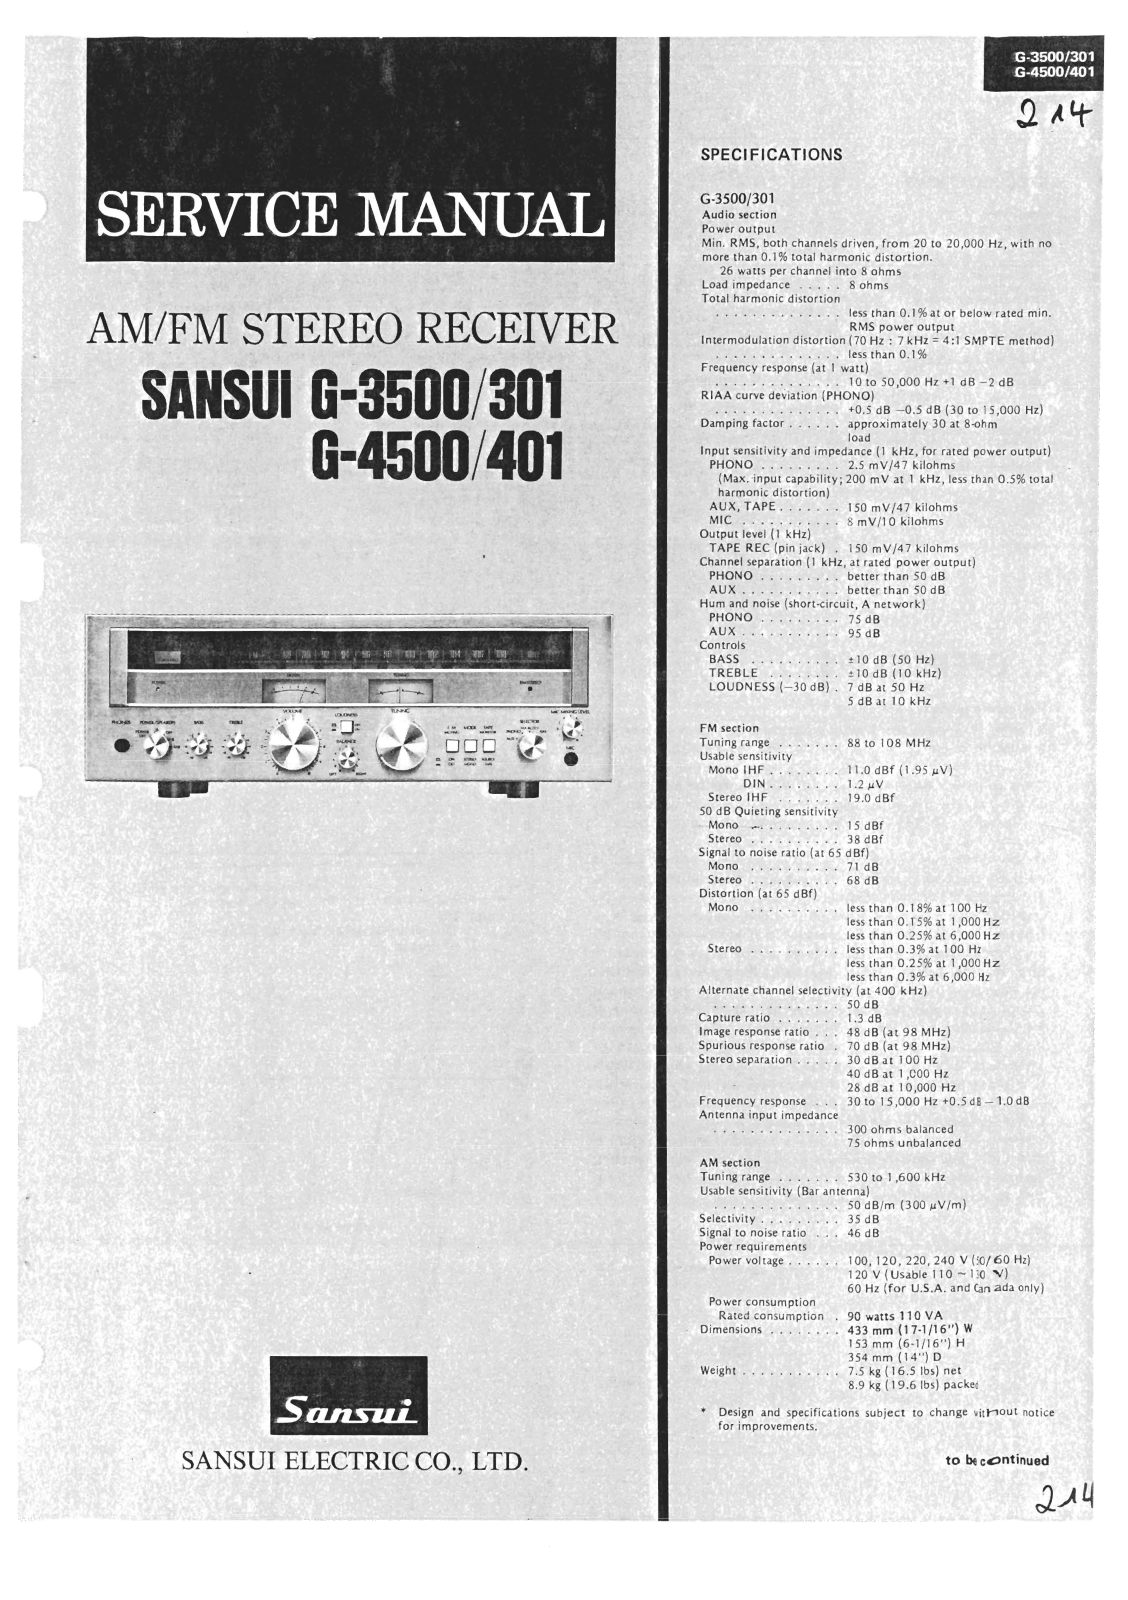 Sansui G-401 Service Manual